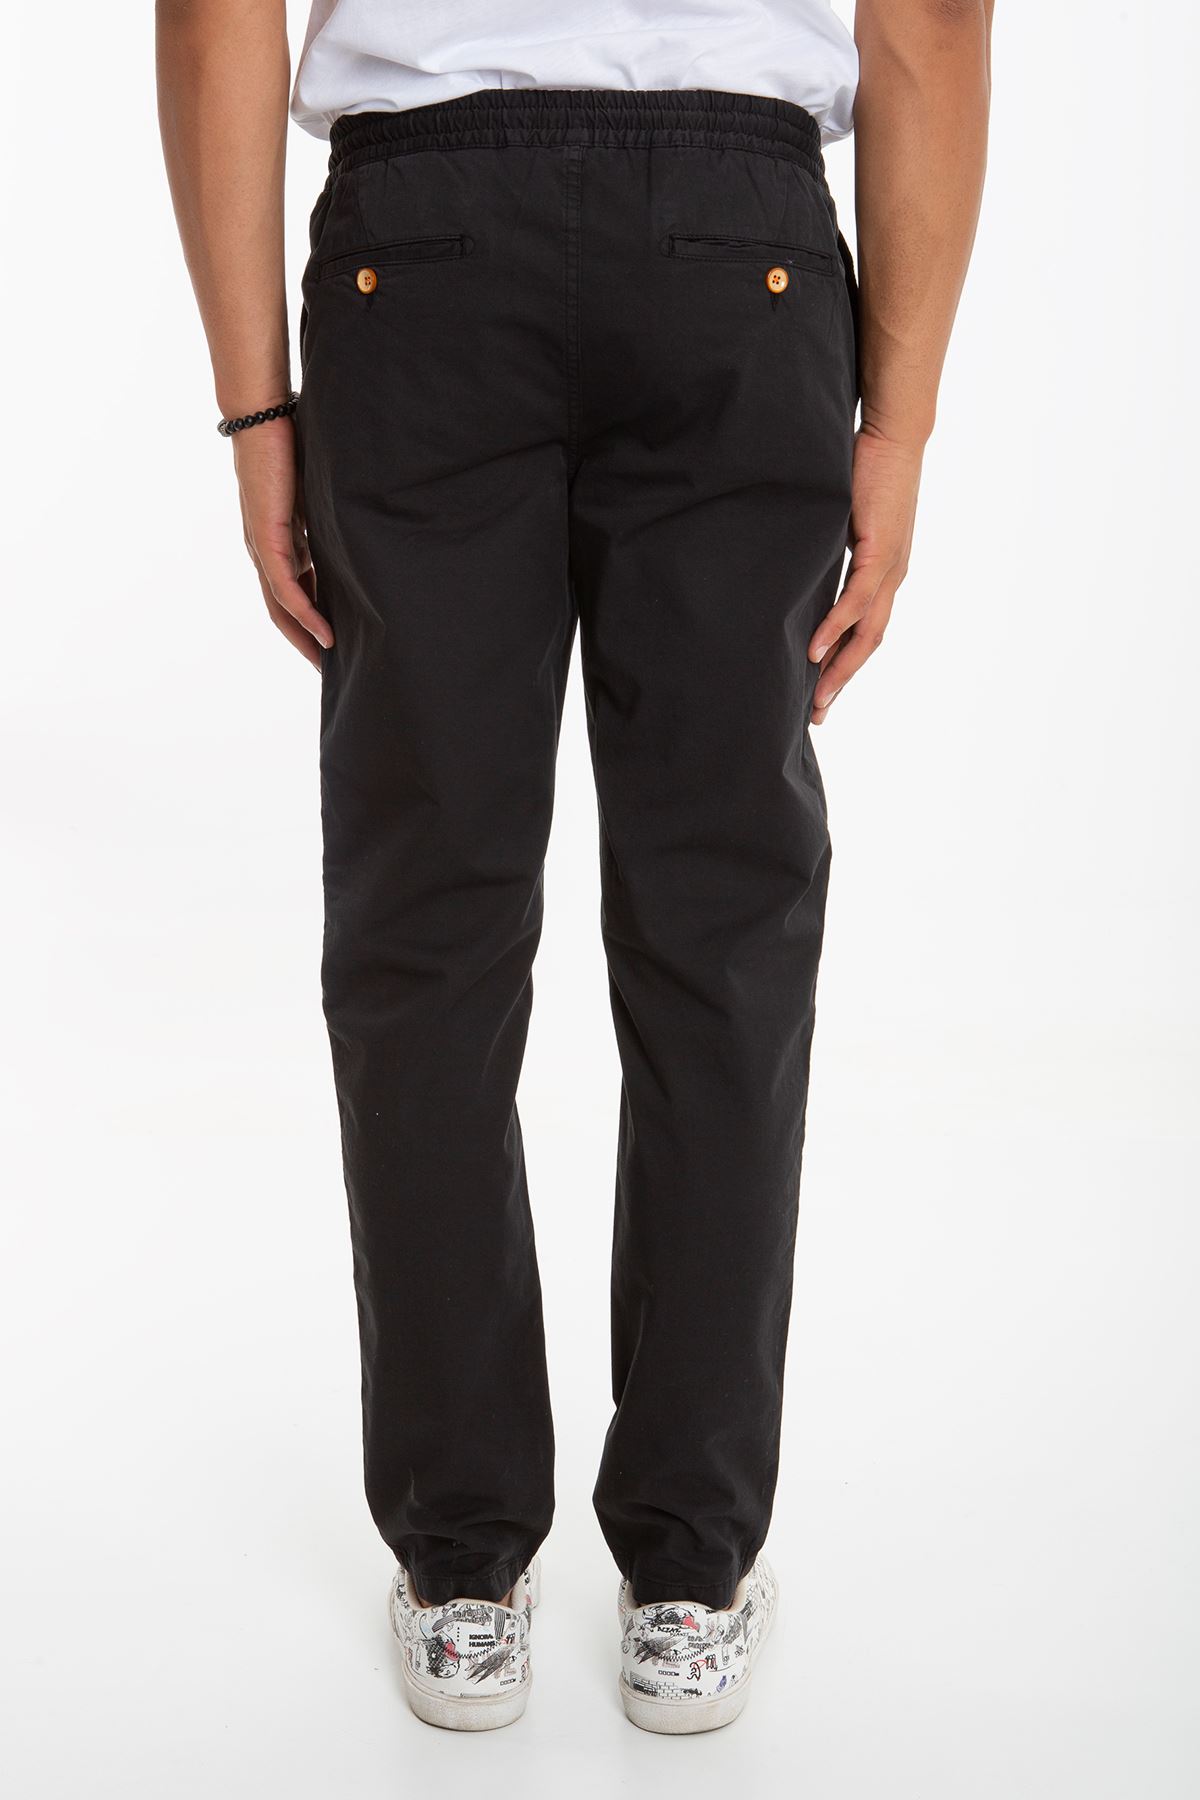 Fitz Roy Erkek Siyah Beli Lastikli İp Bağlamalı Modern Fit Pantolon Mirror 